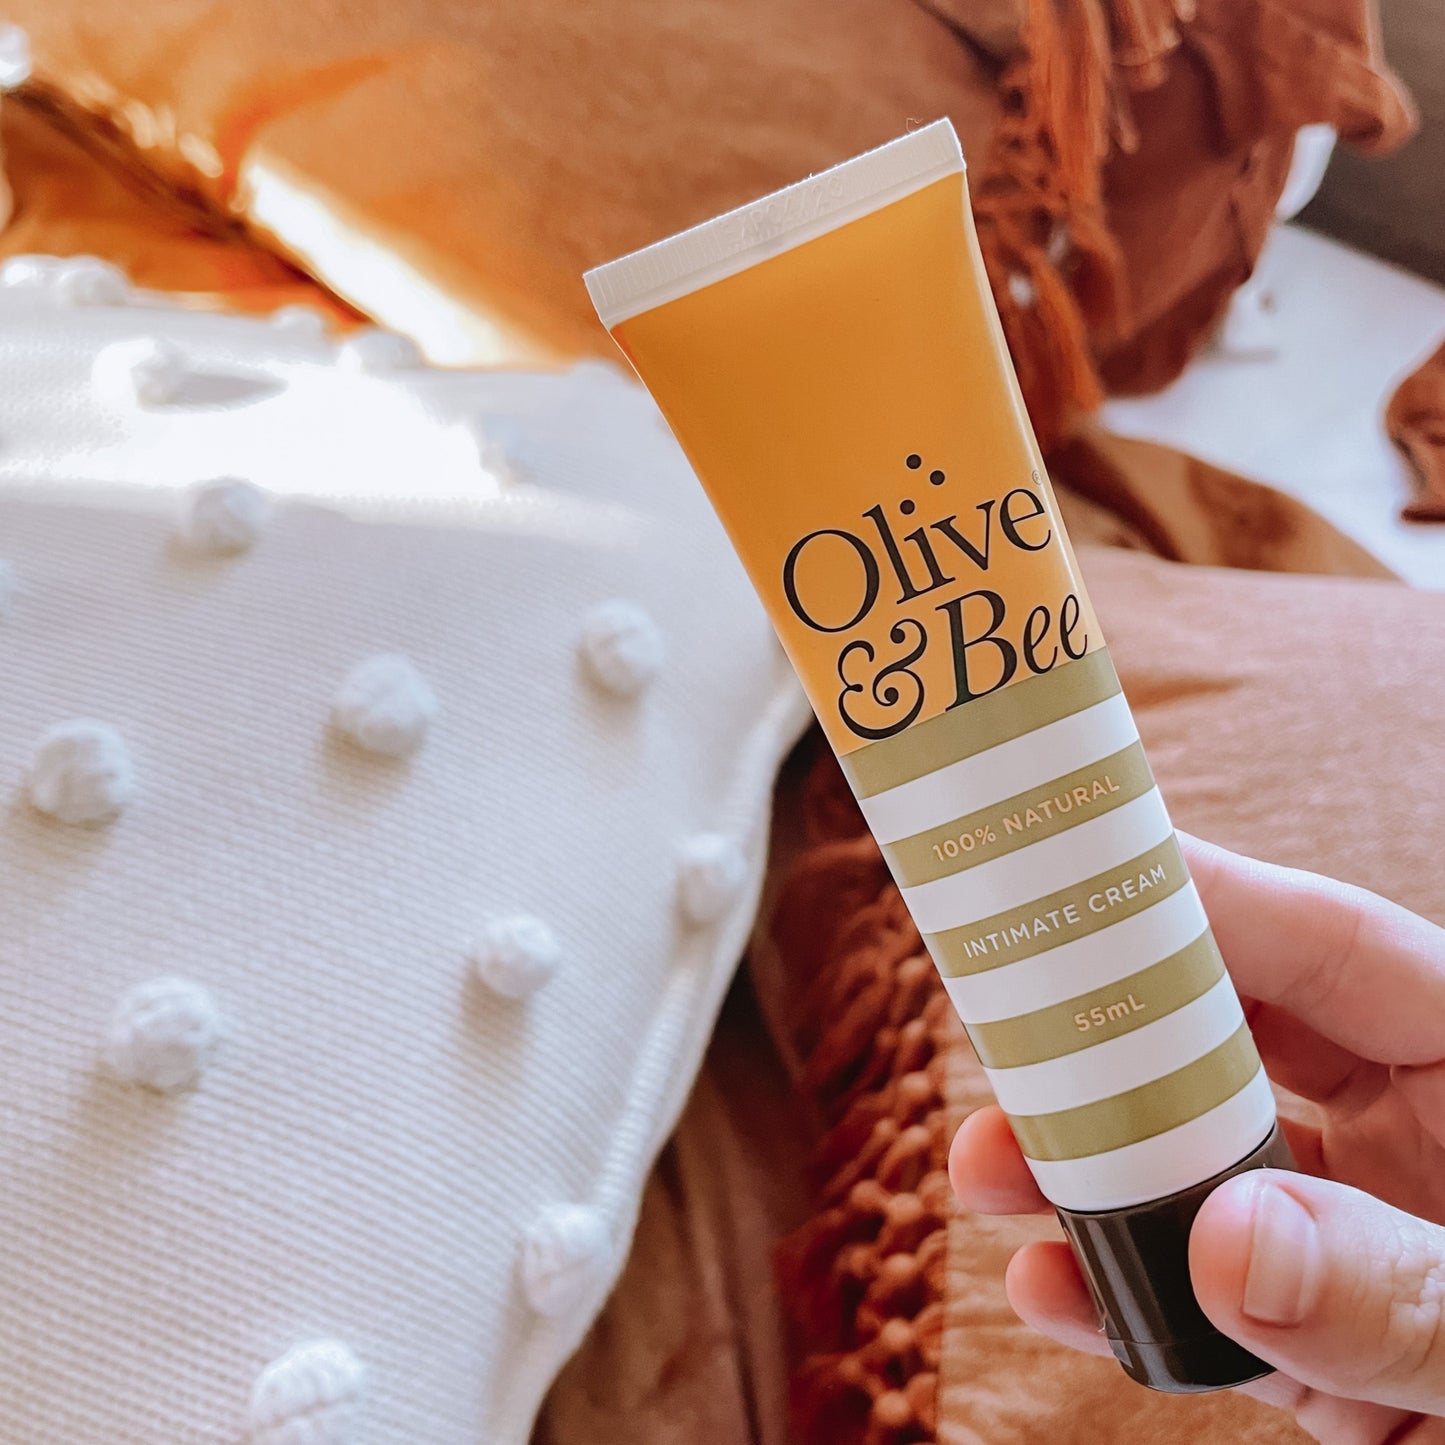 Olive & Bee Intimate Cream 55ml